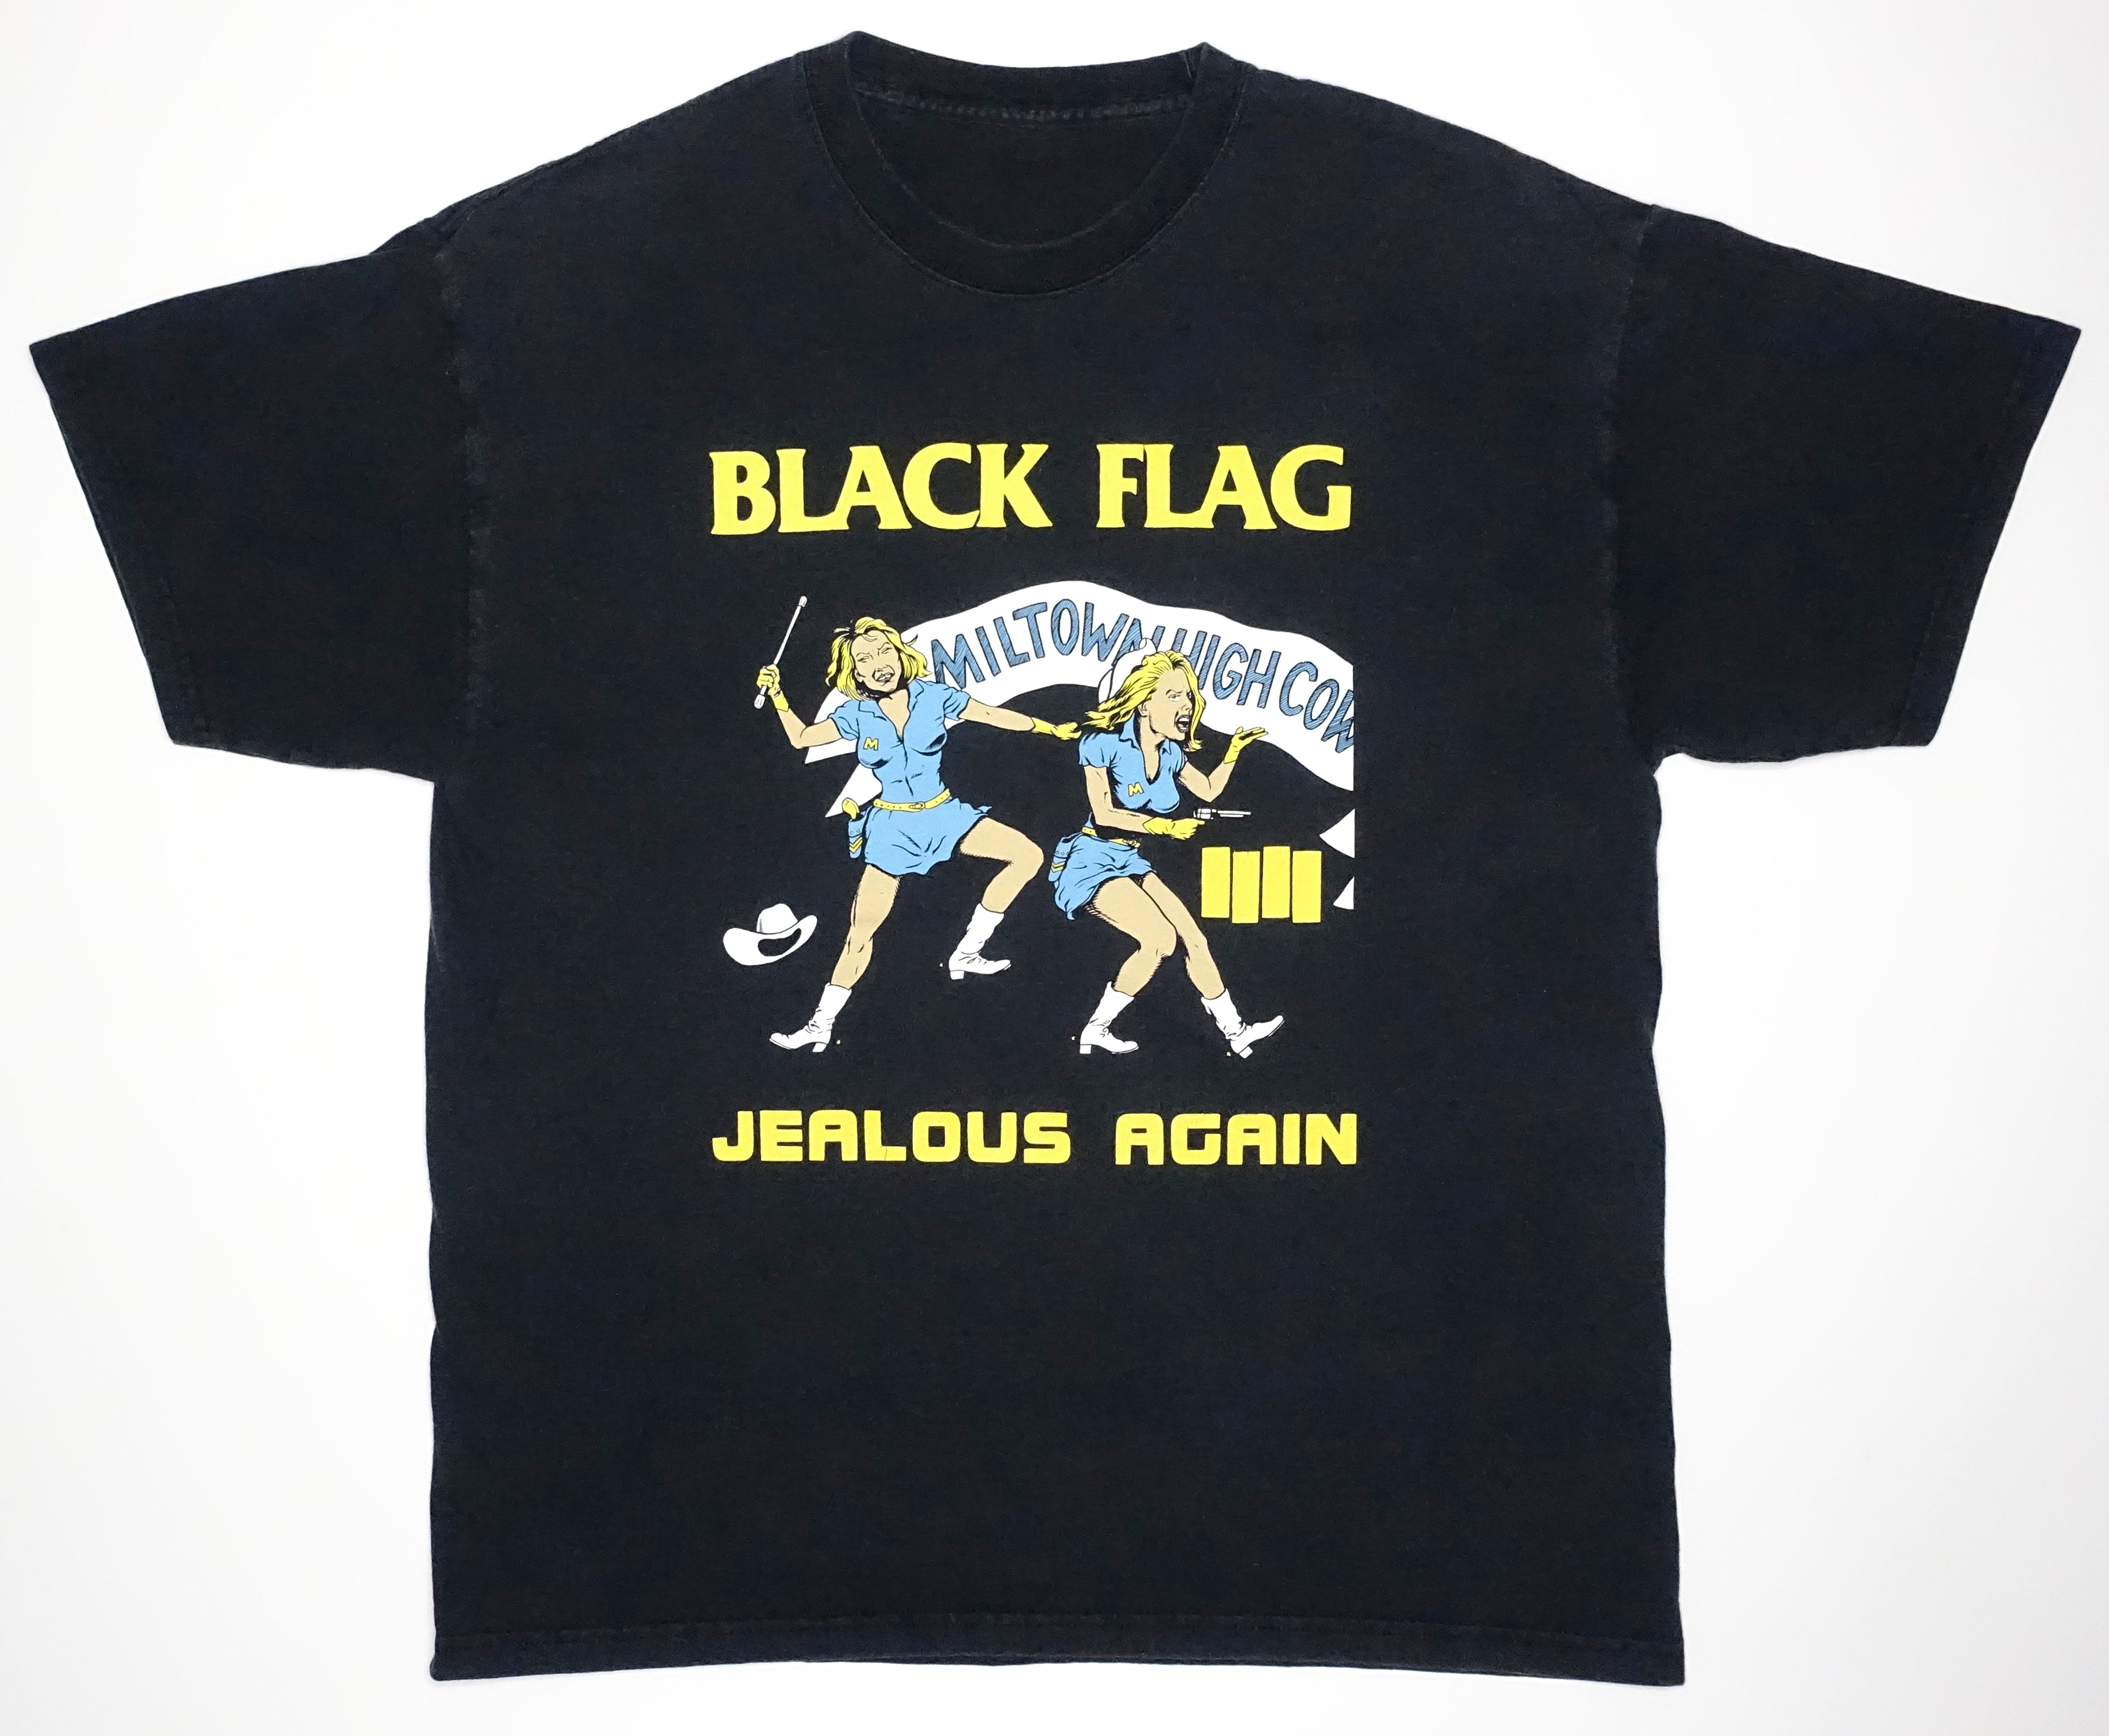 Black Flag - Jealous Again Tour Shirt Size Large Black